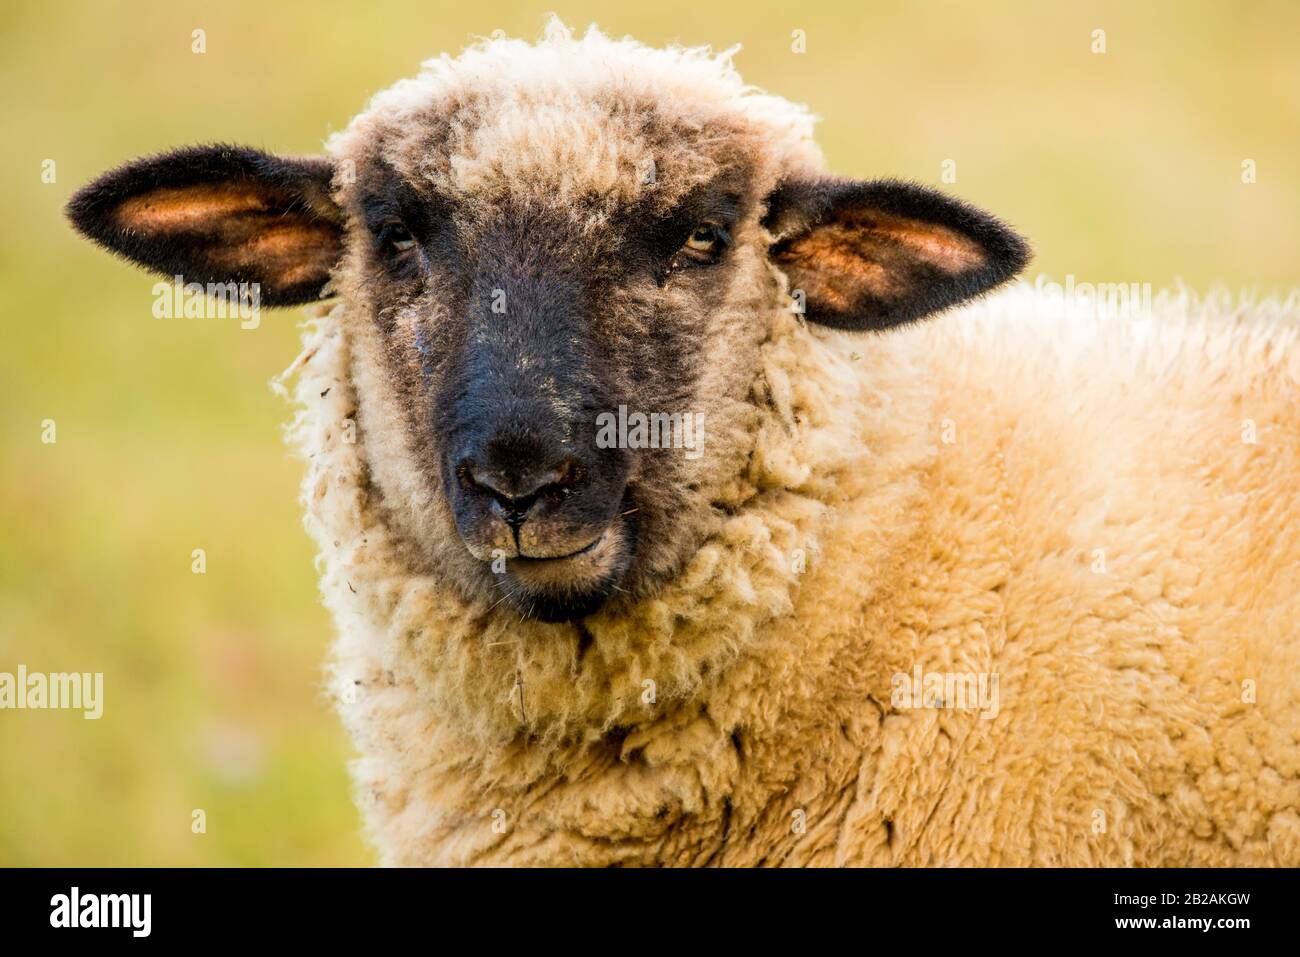 sheep, closeup of the head. Stock Photo